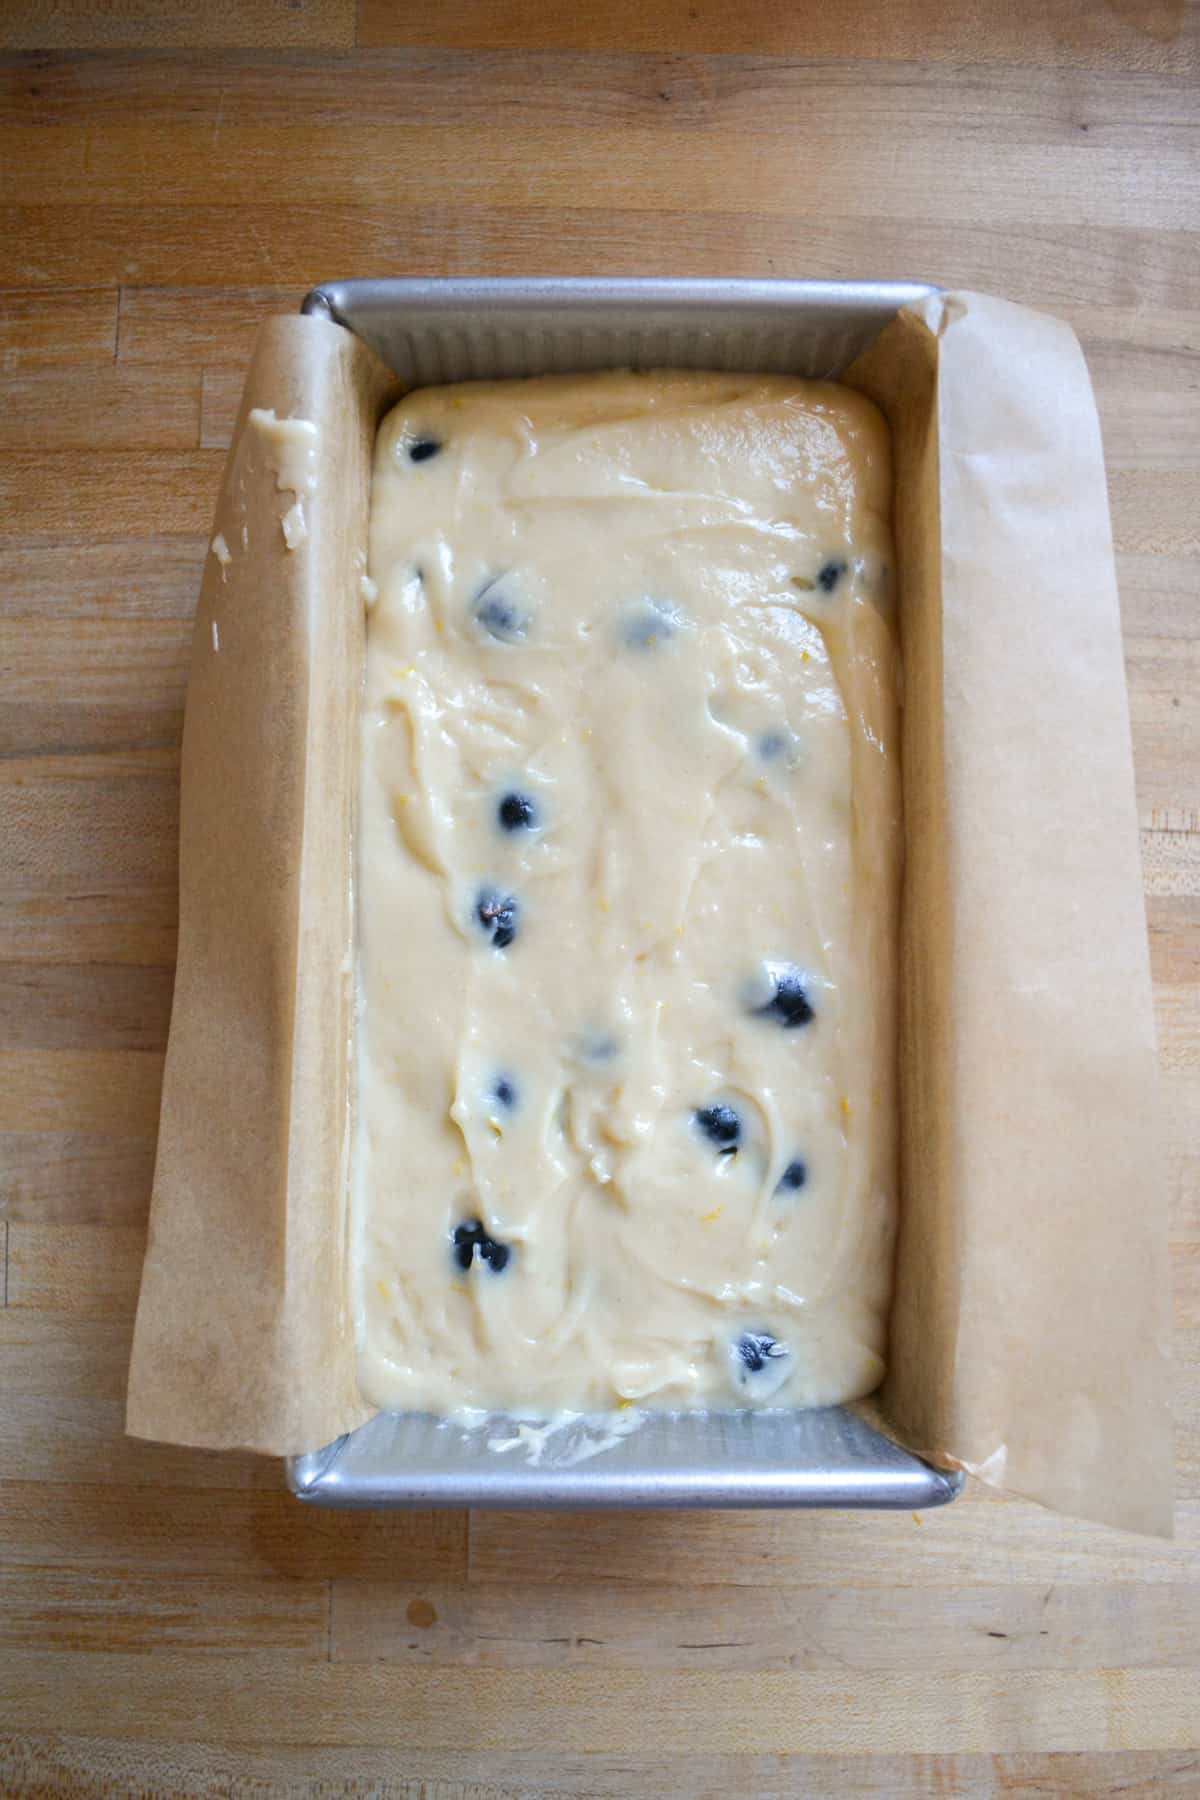 Lemon Blueberry cake batter in a prepared loaf pan.